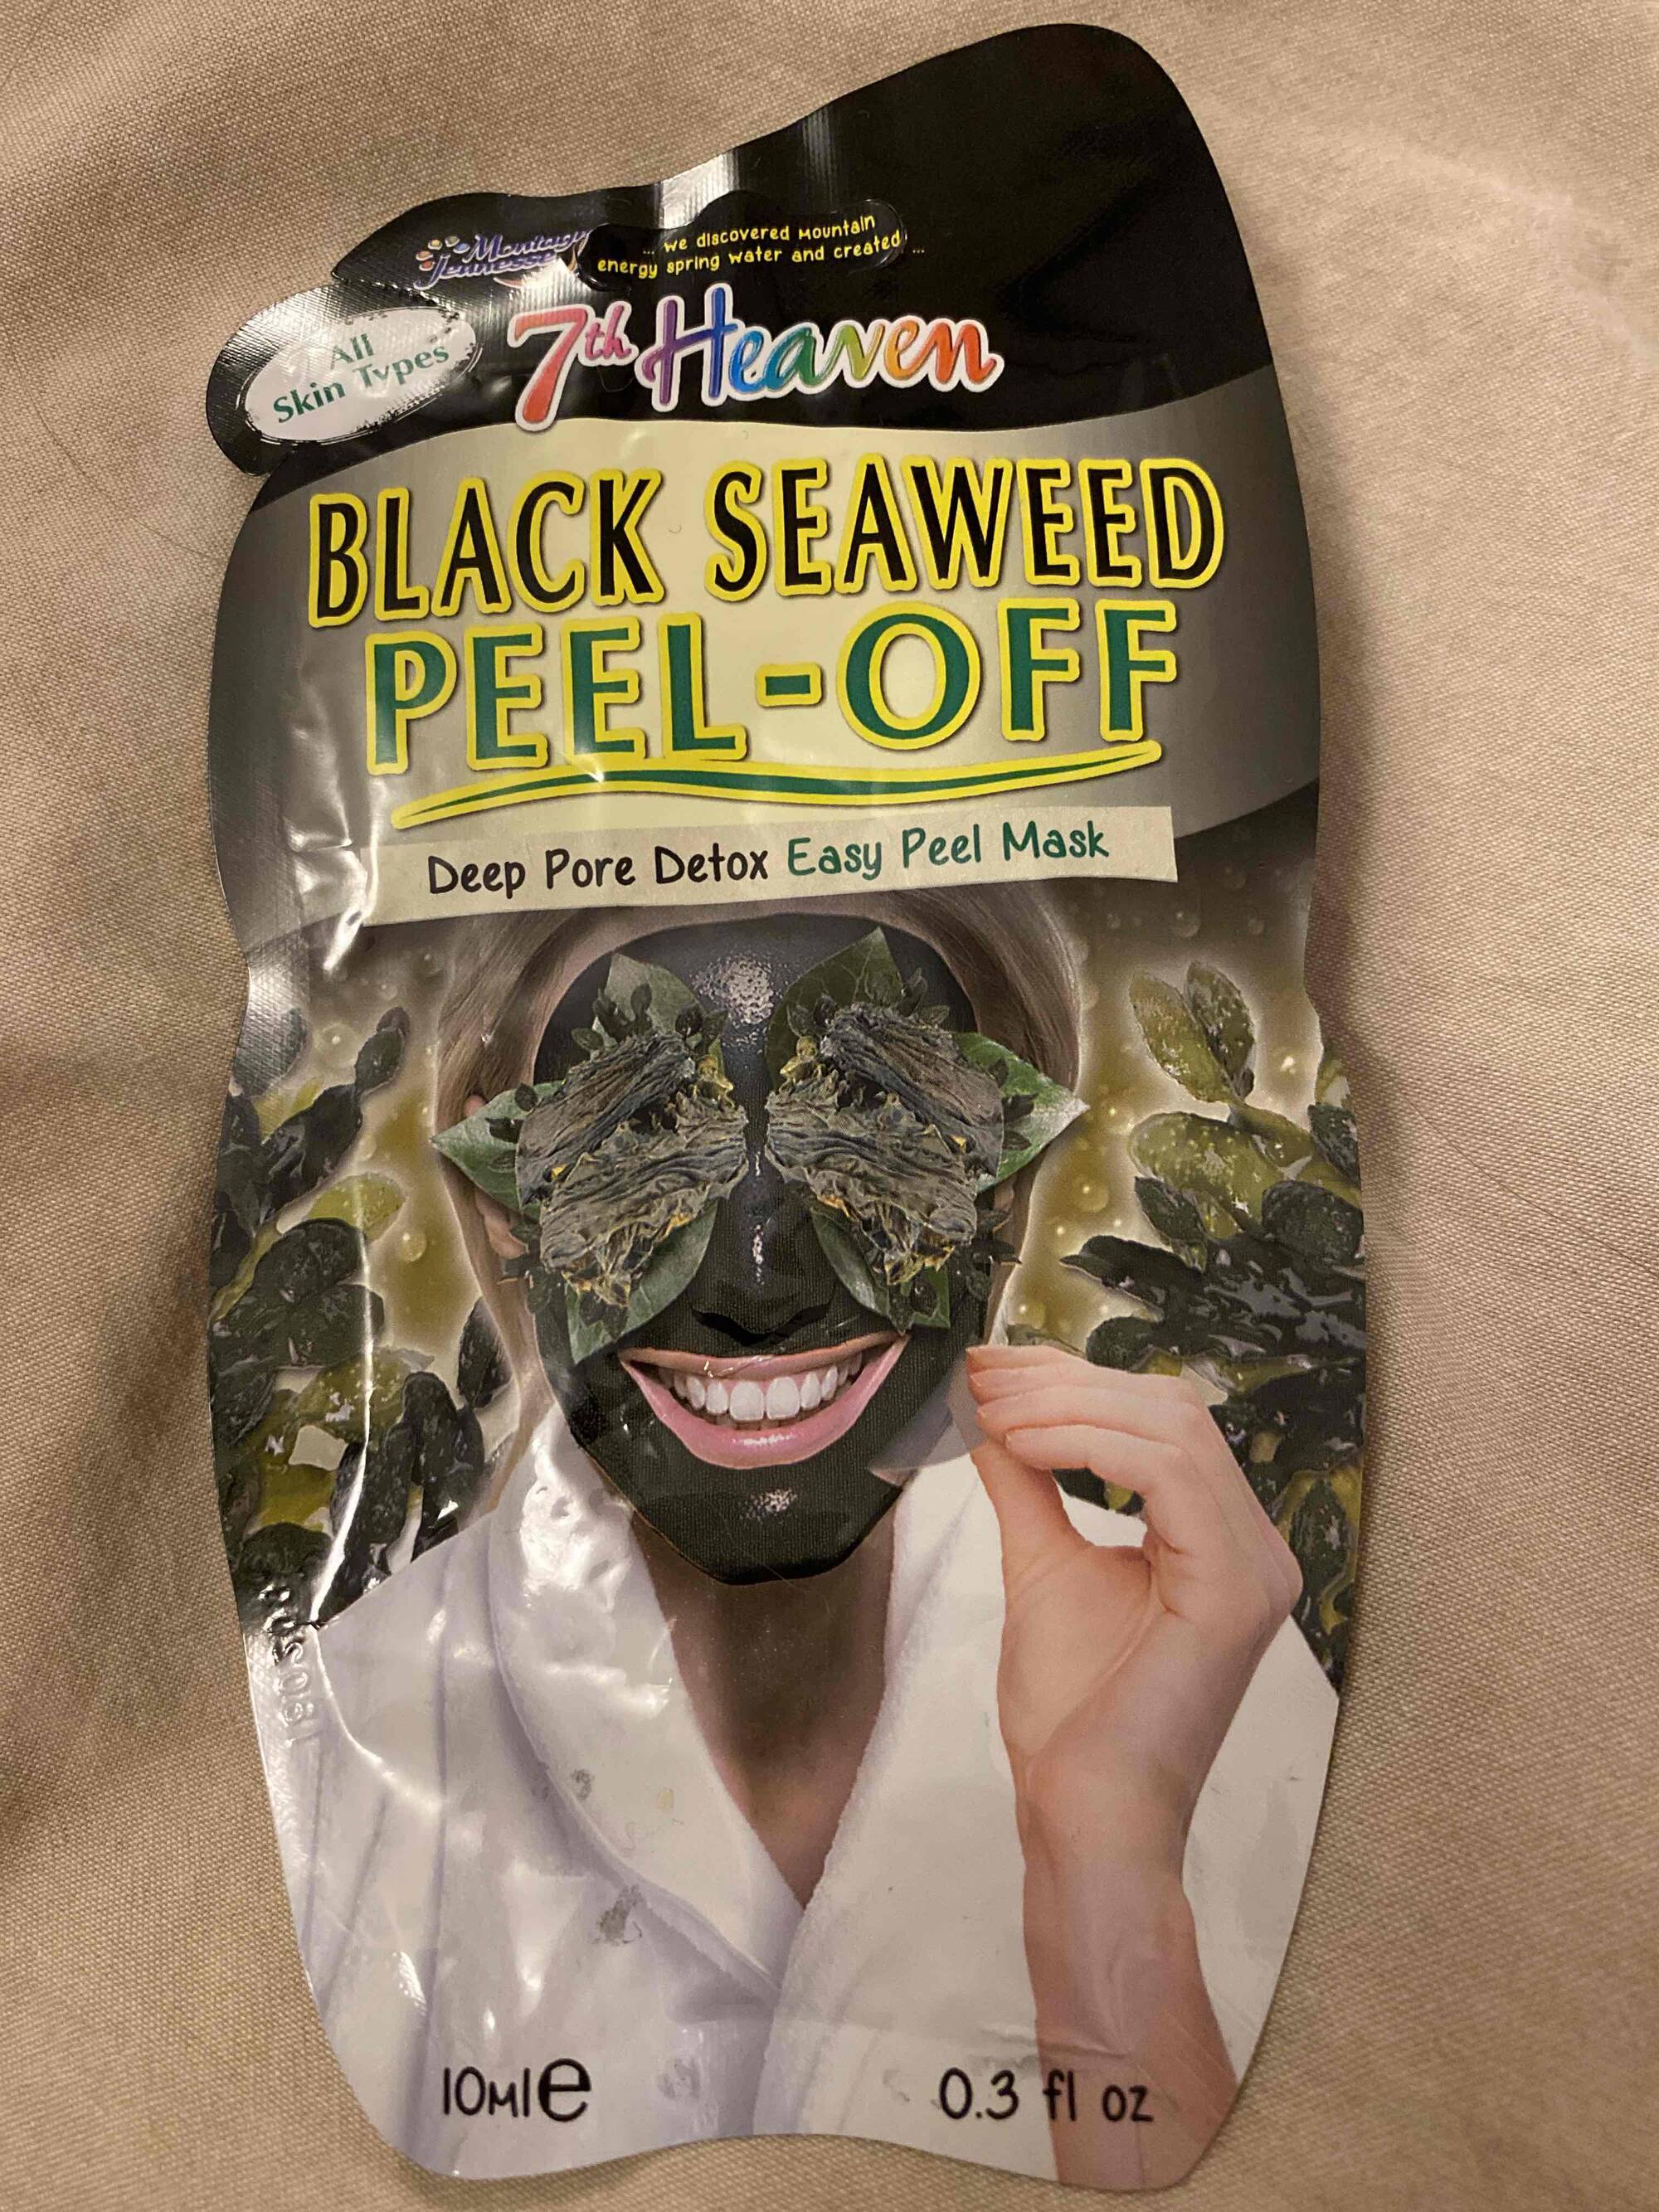 7TH HEAVEN - Black seaweed peel-off - Easy peel mask